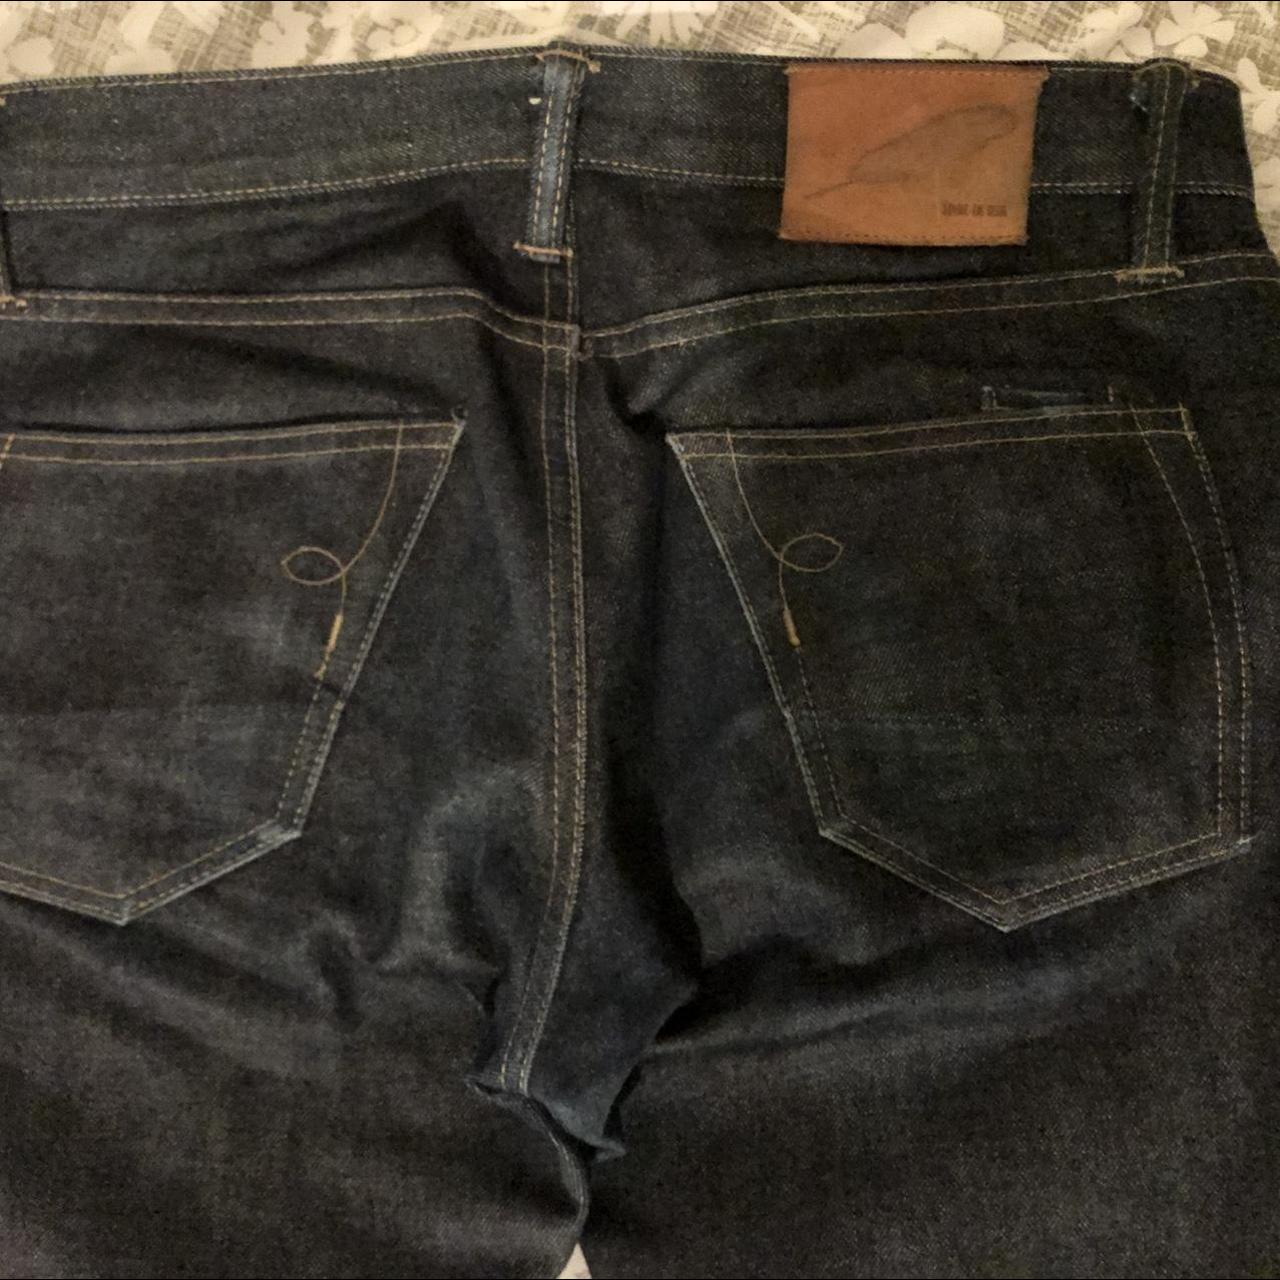 Rgt ROGUÉ TERRITORY selvedge jeans 28x30 - Depop